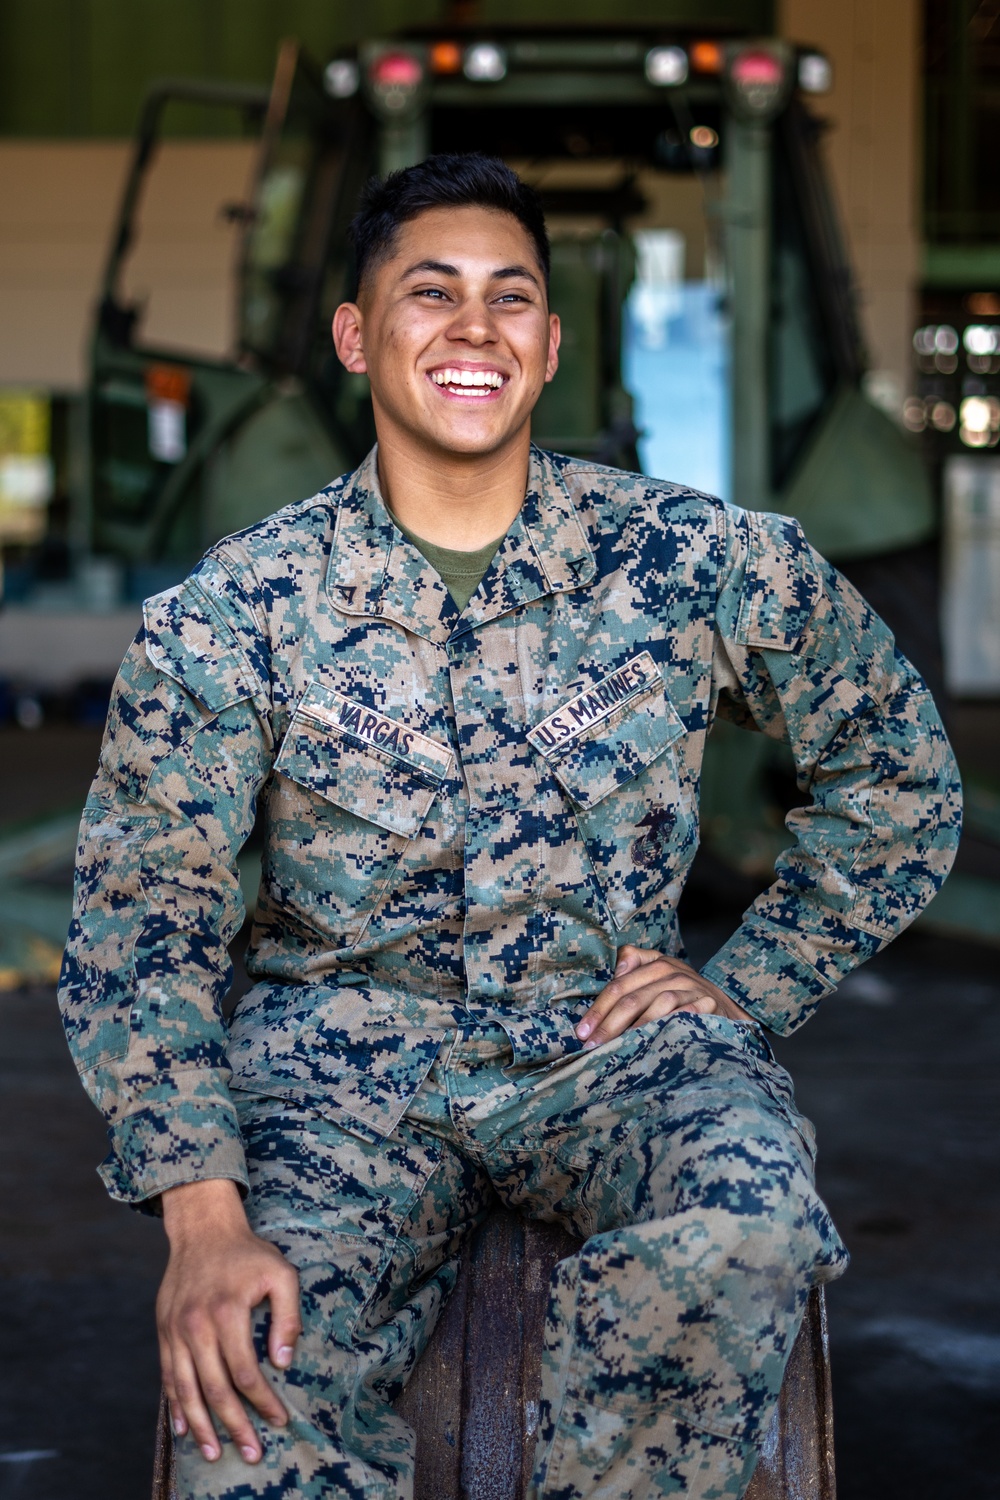 California native, U.S. Marine deploys to Australia